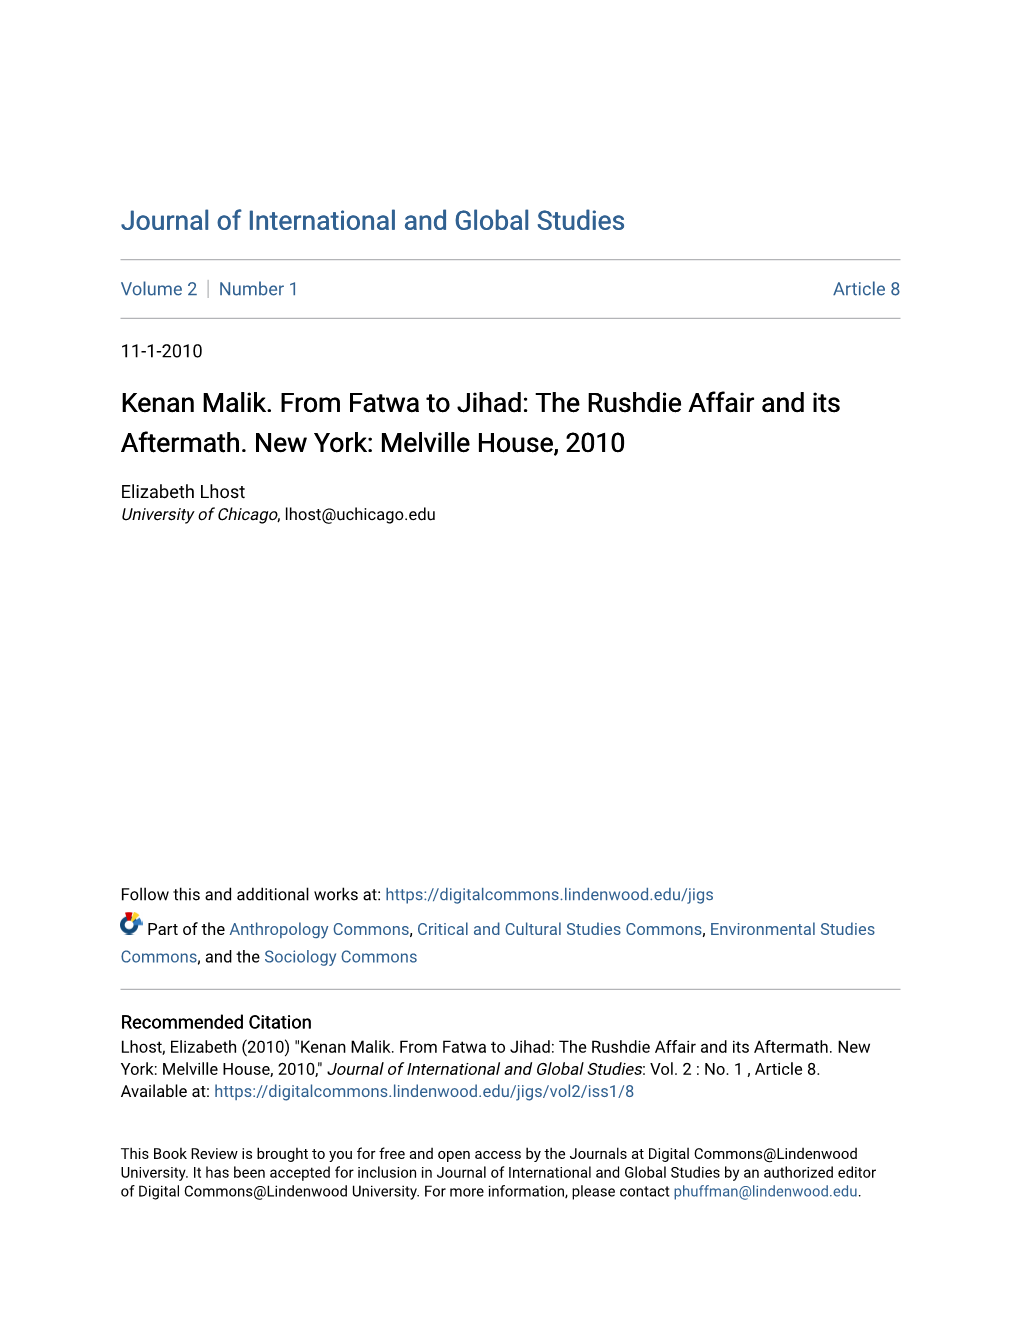 Kenan Malik. from Fatwa to Jihad: the Rushdie Affair and Its Aftermath